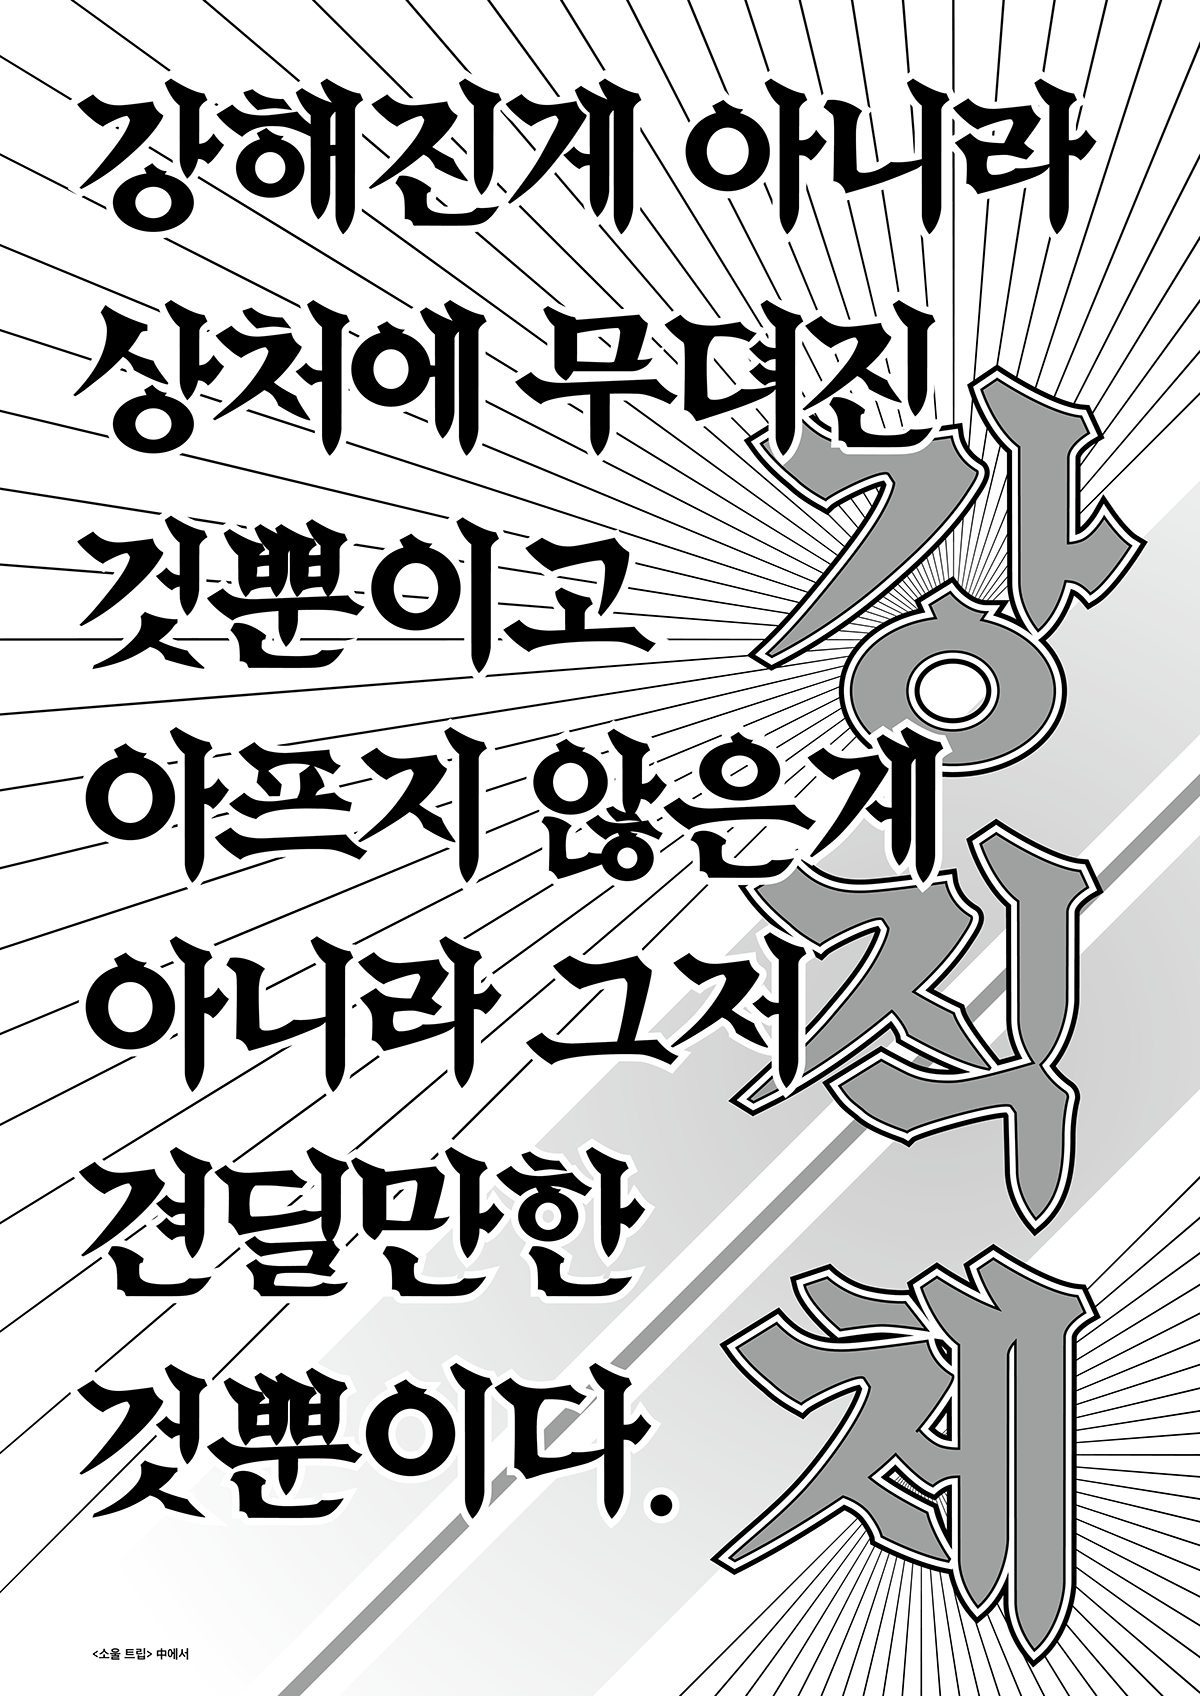 Typeface Hangul lettering